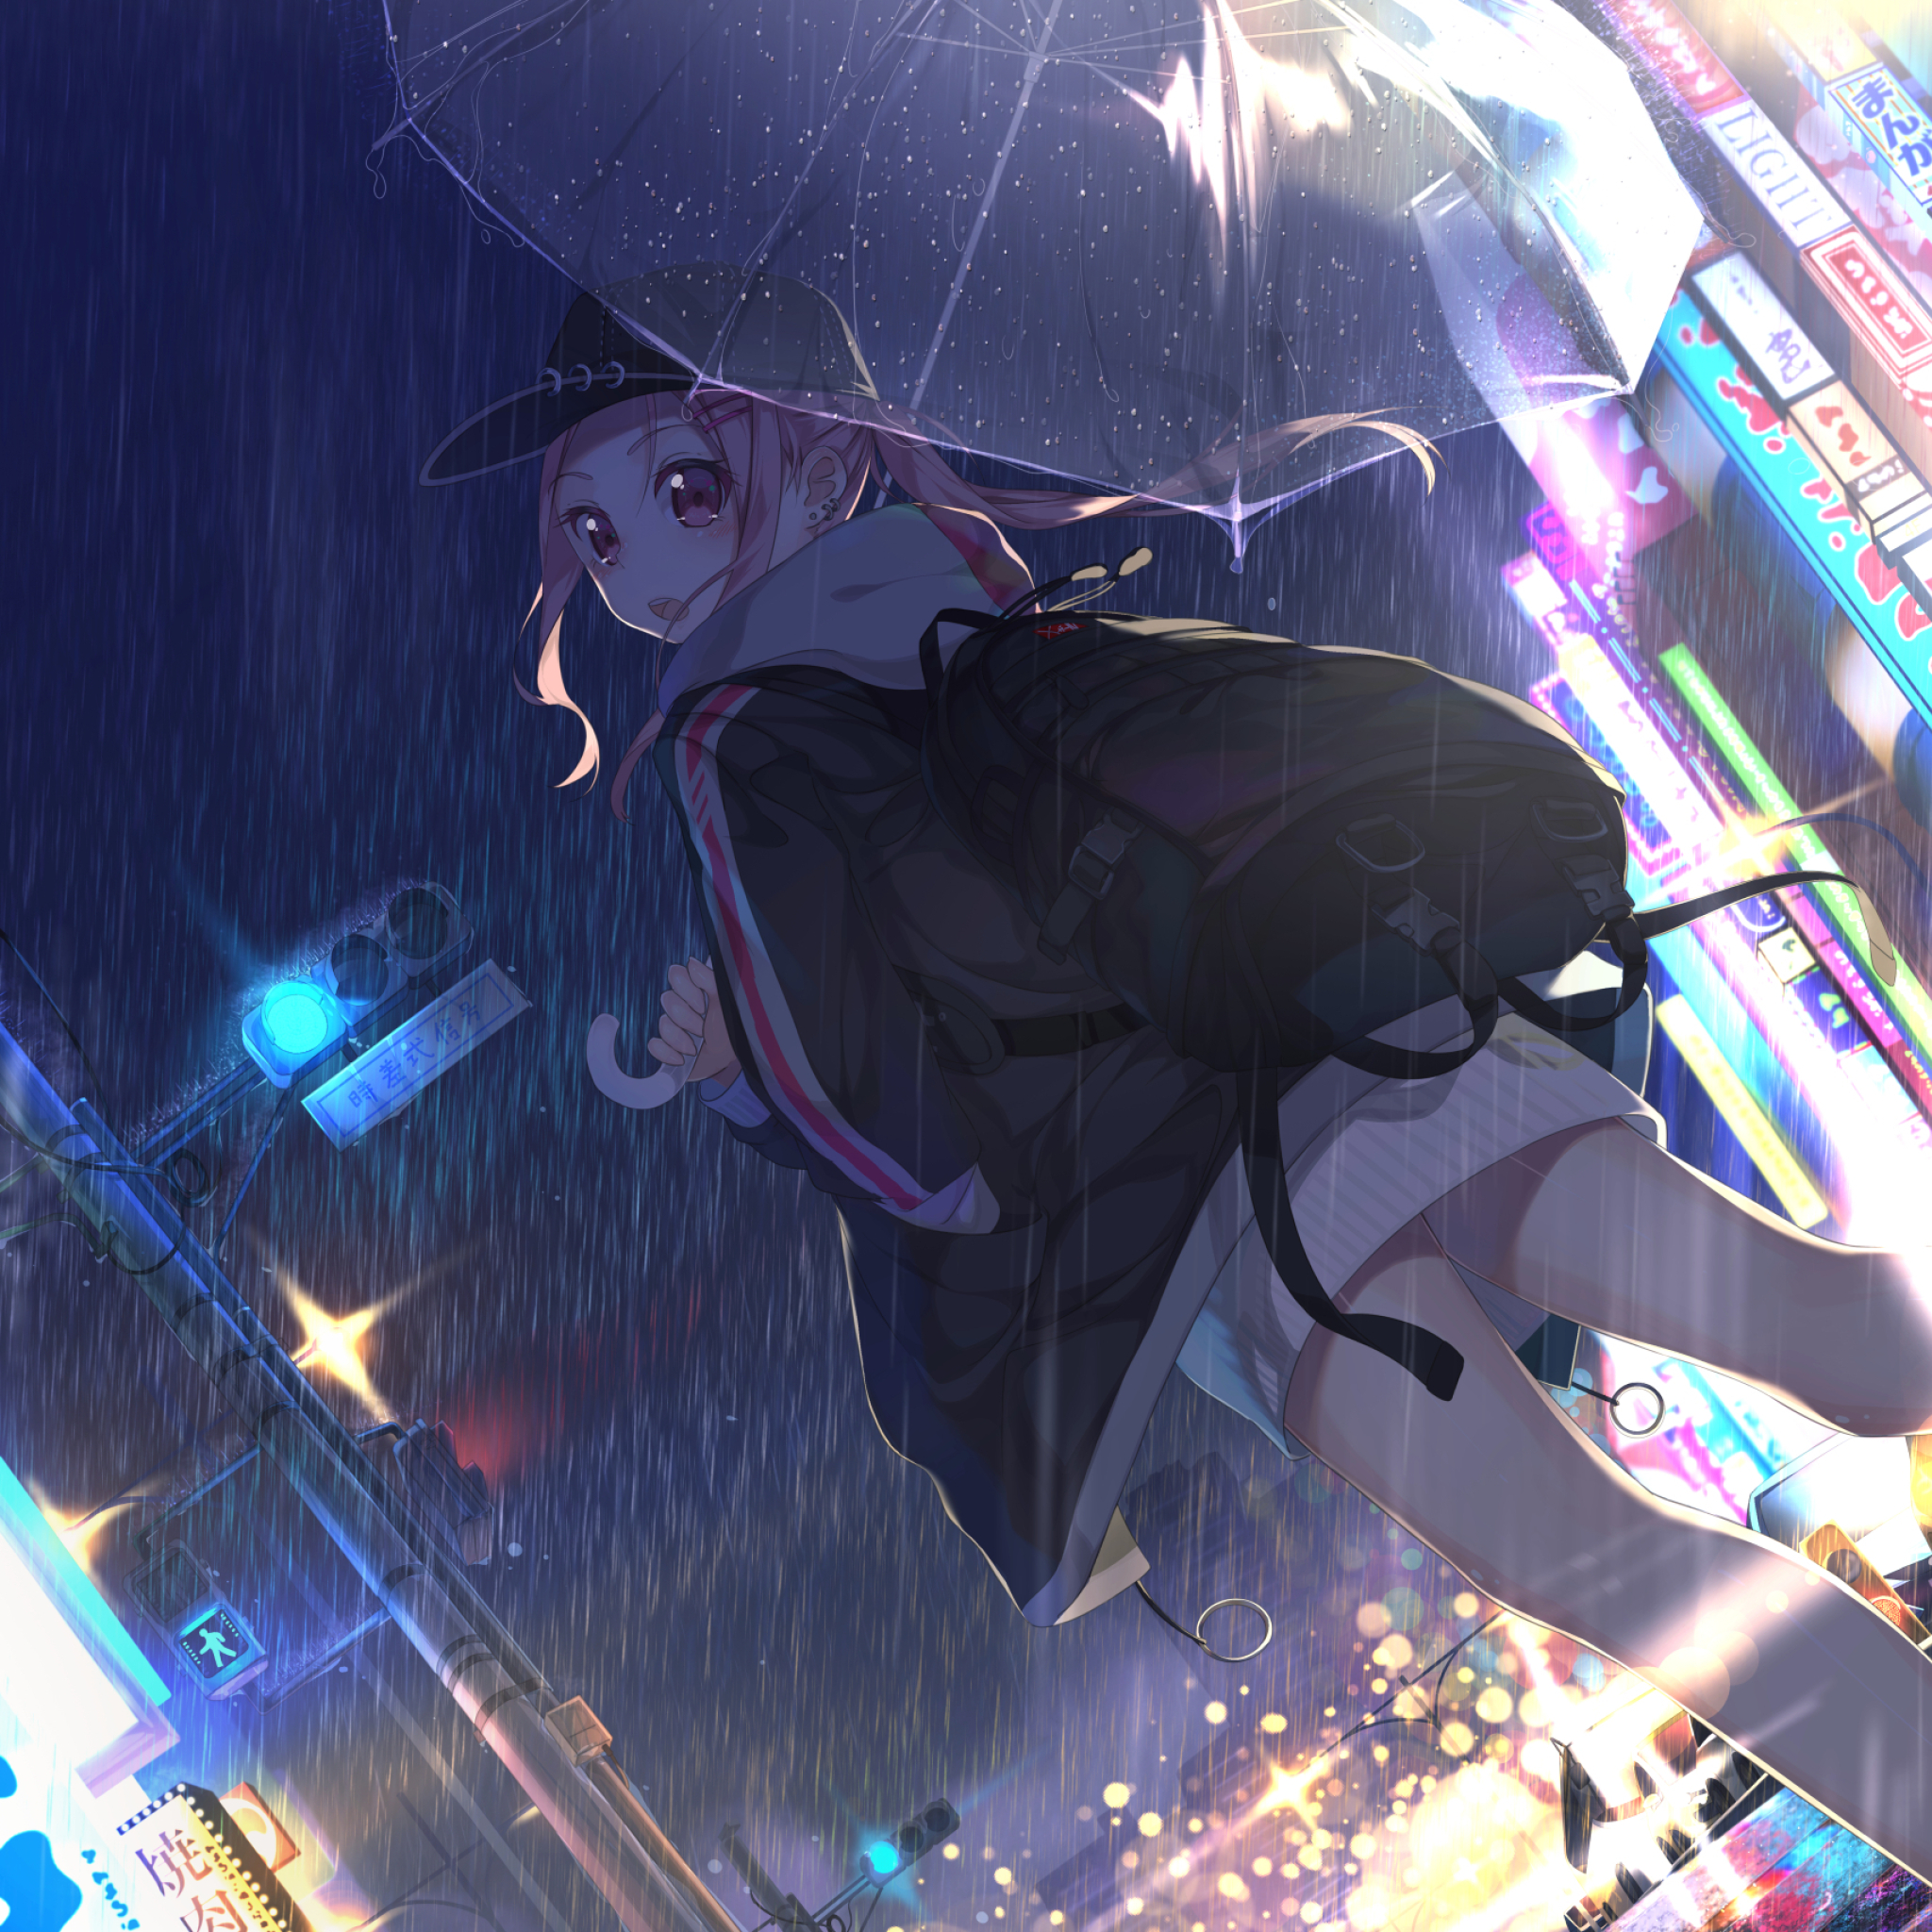 girl with umbrella in rain wallpaper